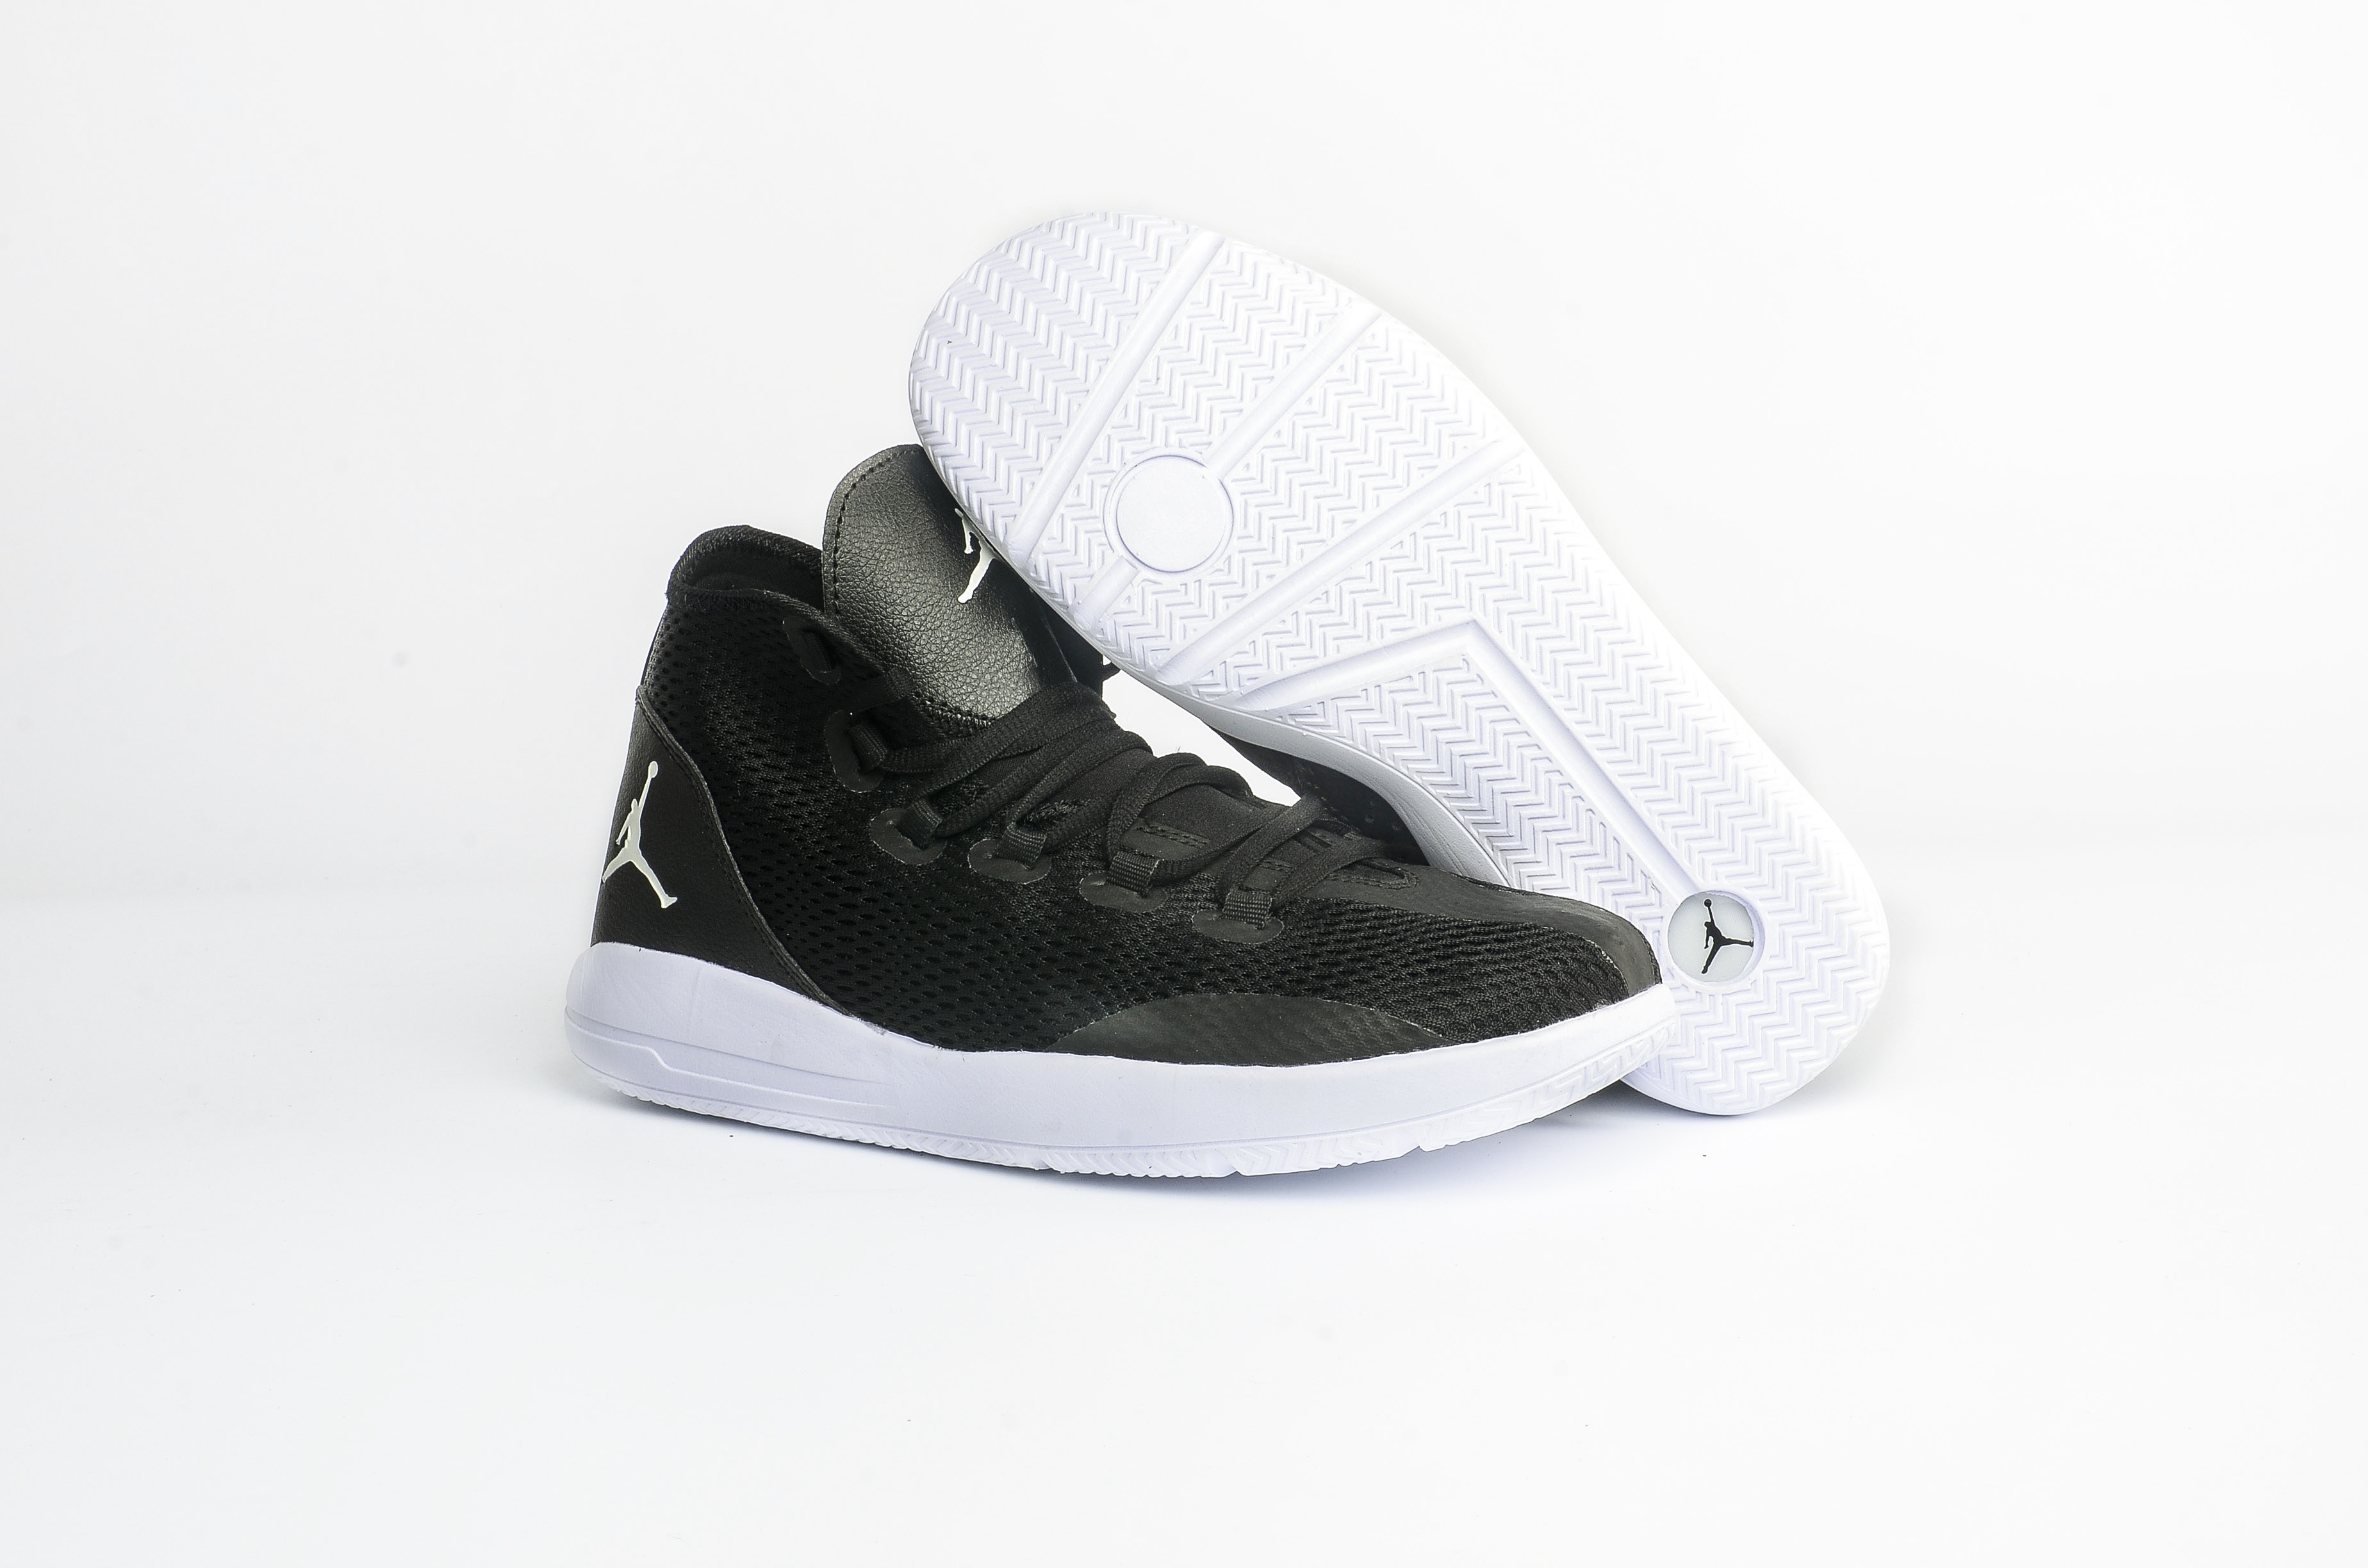 Original Air Jordan 11 Black White Running Shoes